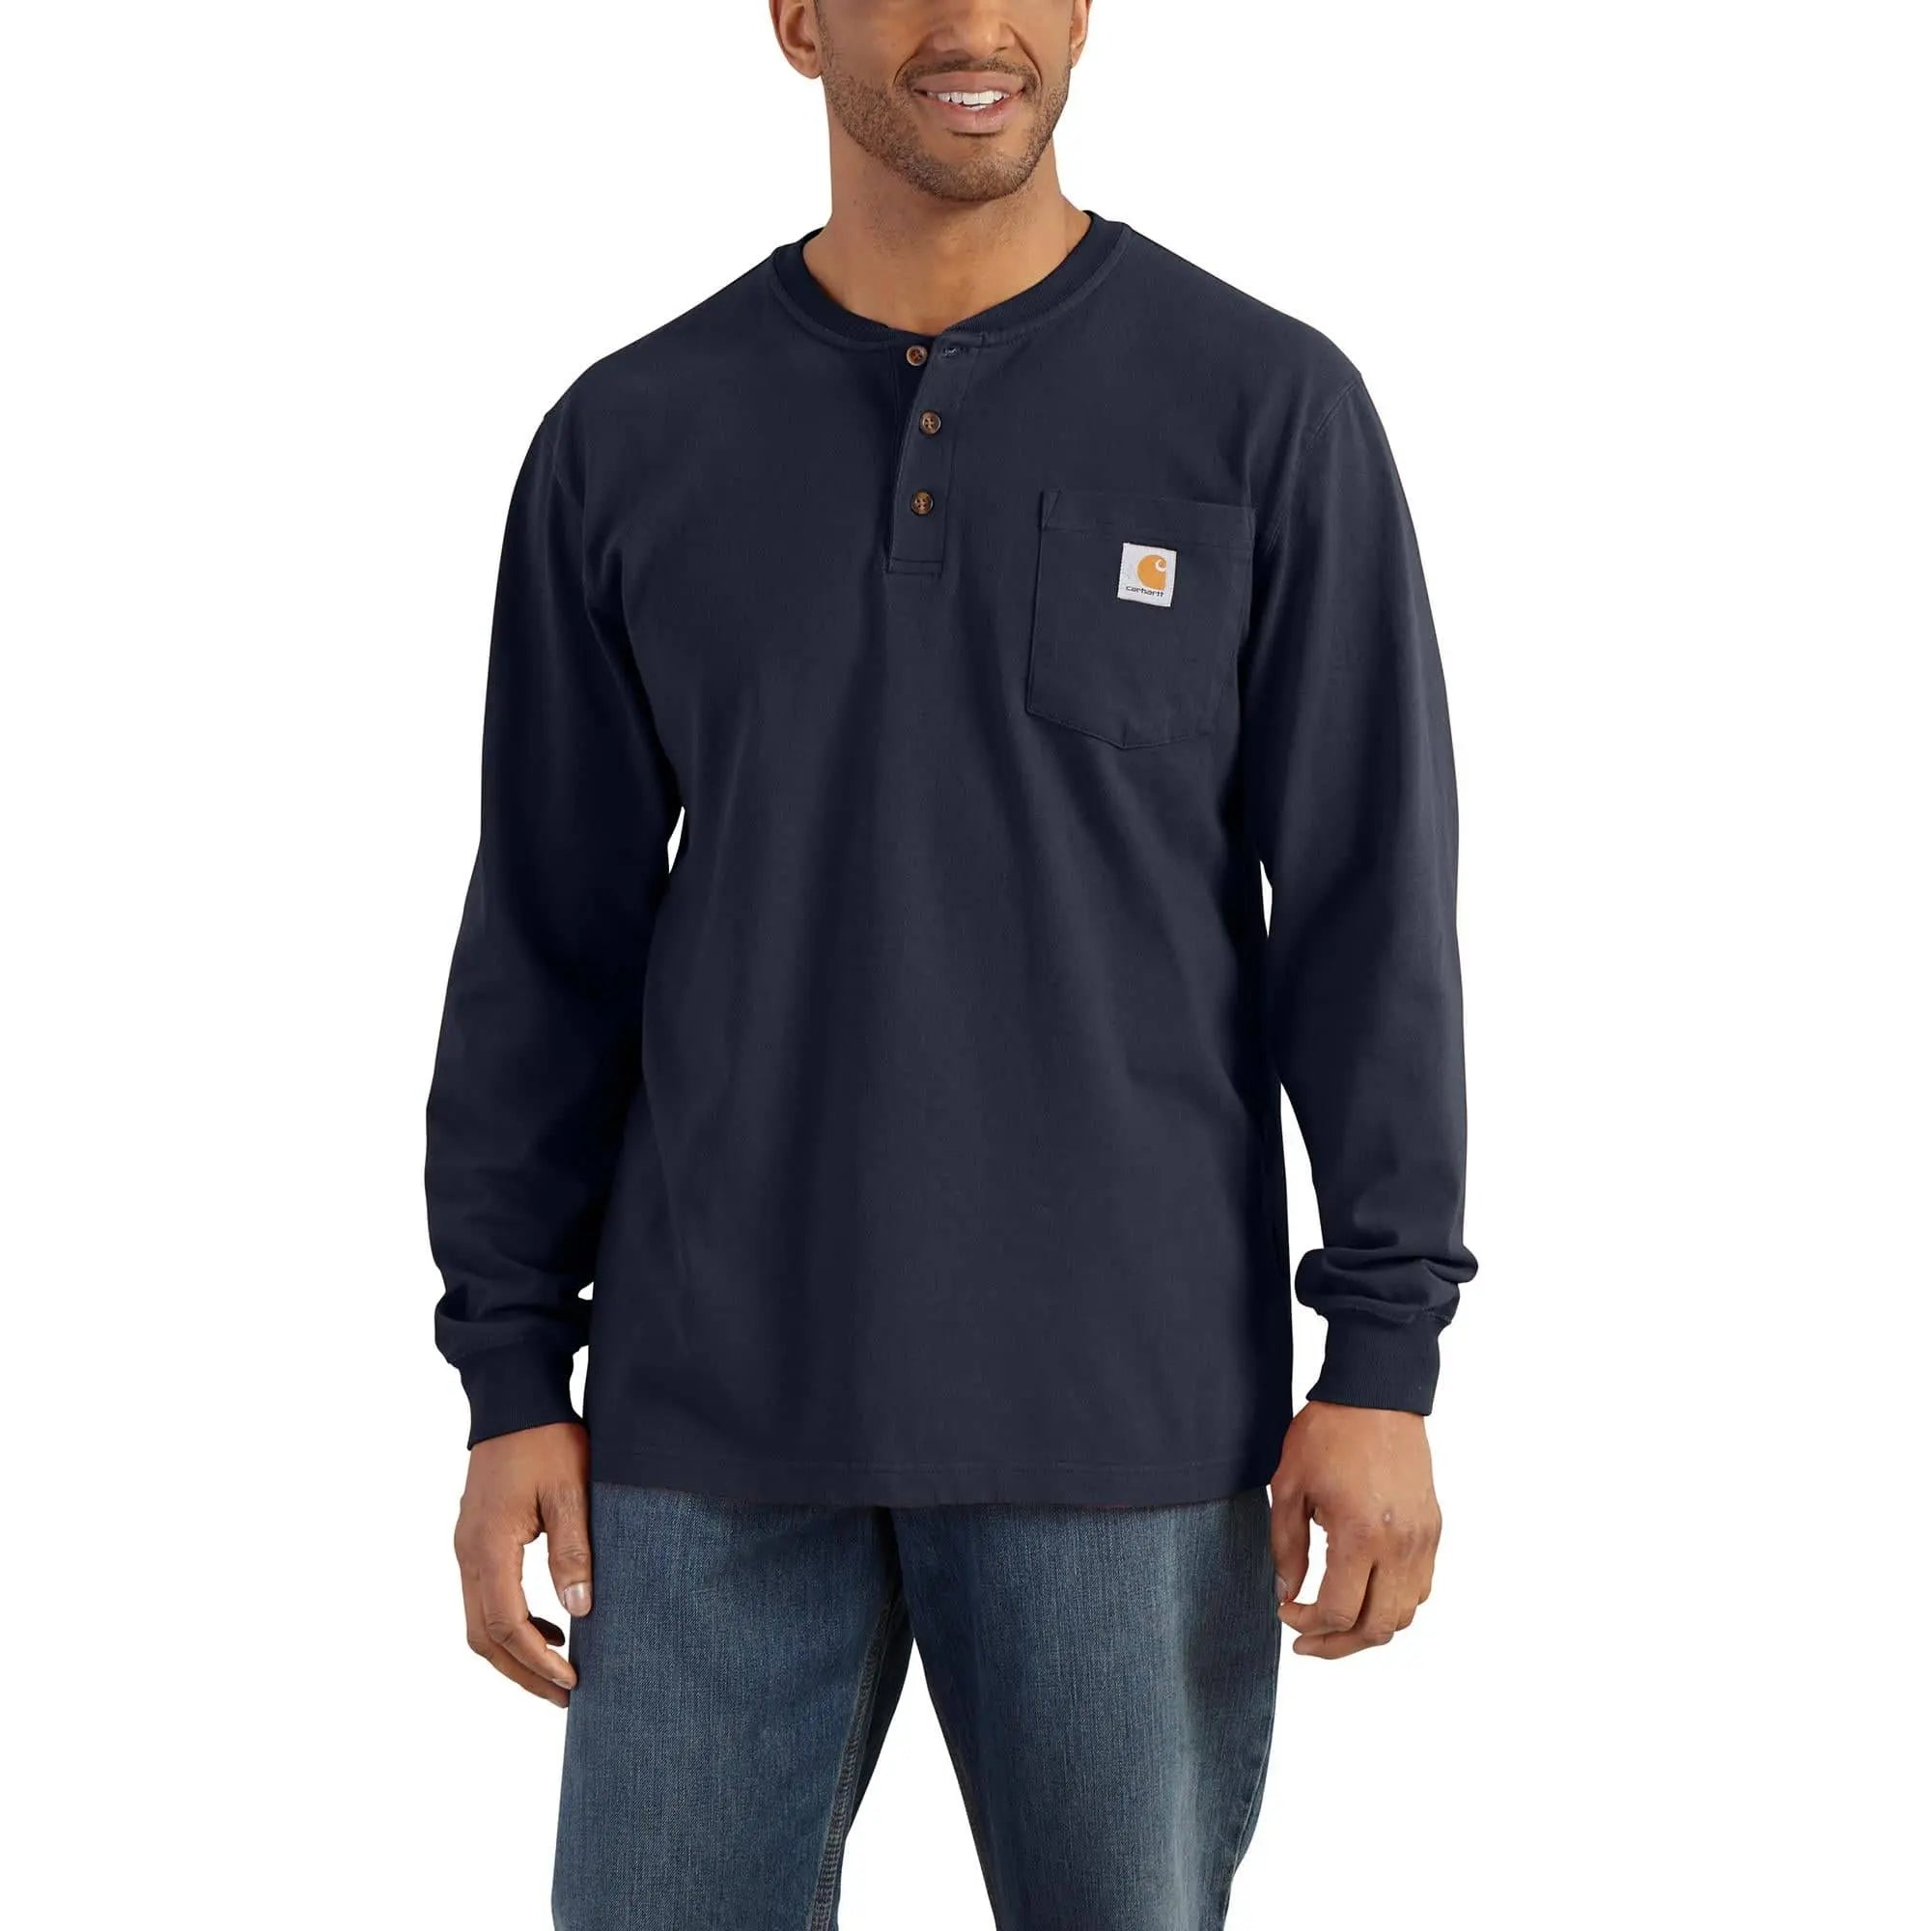 Carhartt - Long Sleeve Henley T-Shirt, Navy - Becker Safety and Supply